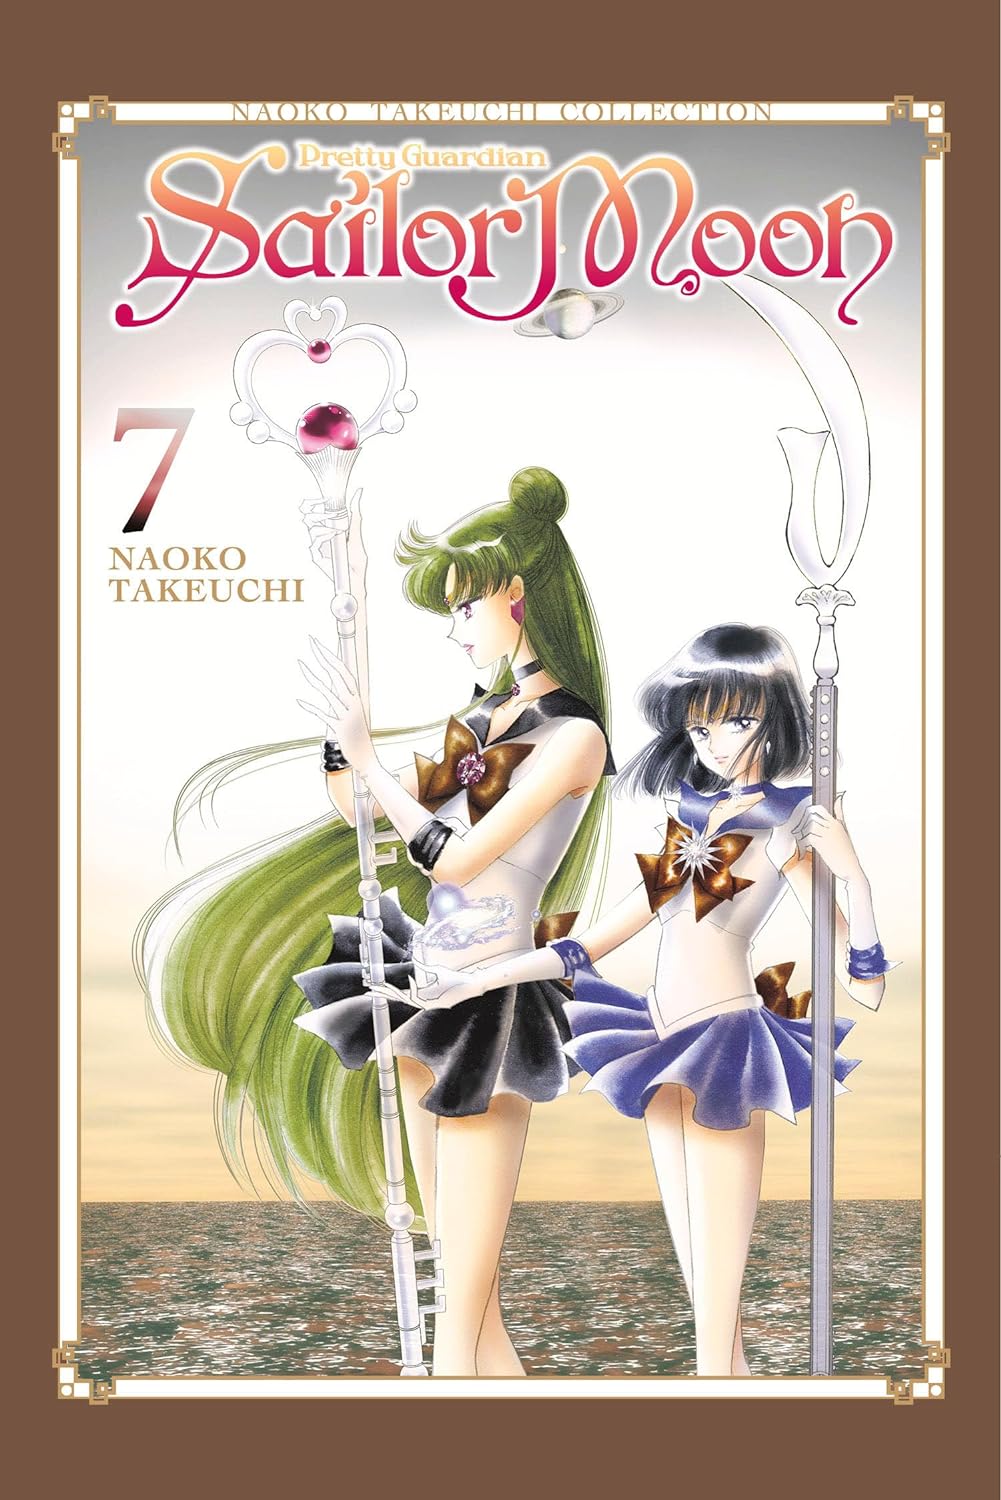 Sailor Moon Vol. 07 (Naoko Takeuchi Collection)